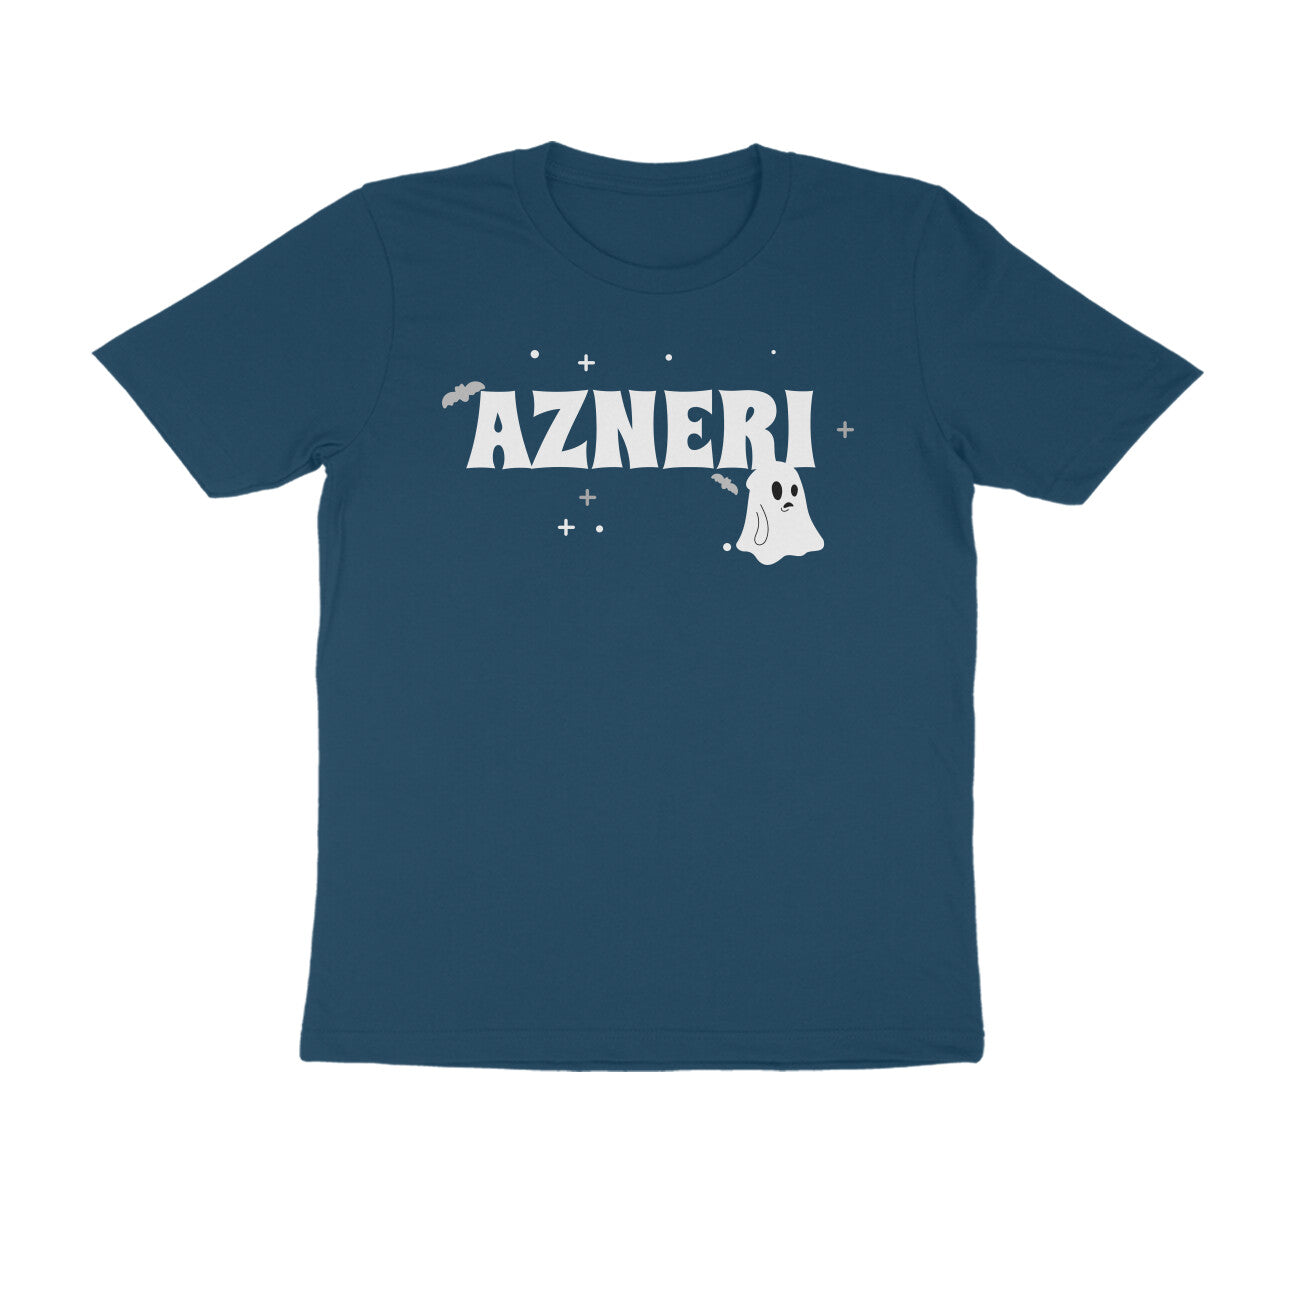 AZNERI MEN'S LIFESTYLE COLLECTION GENT - Goa Shirts